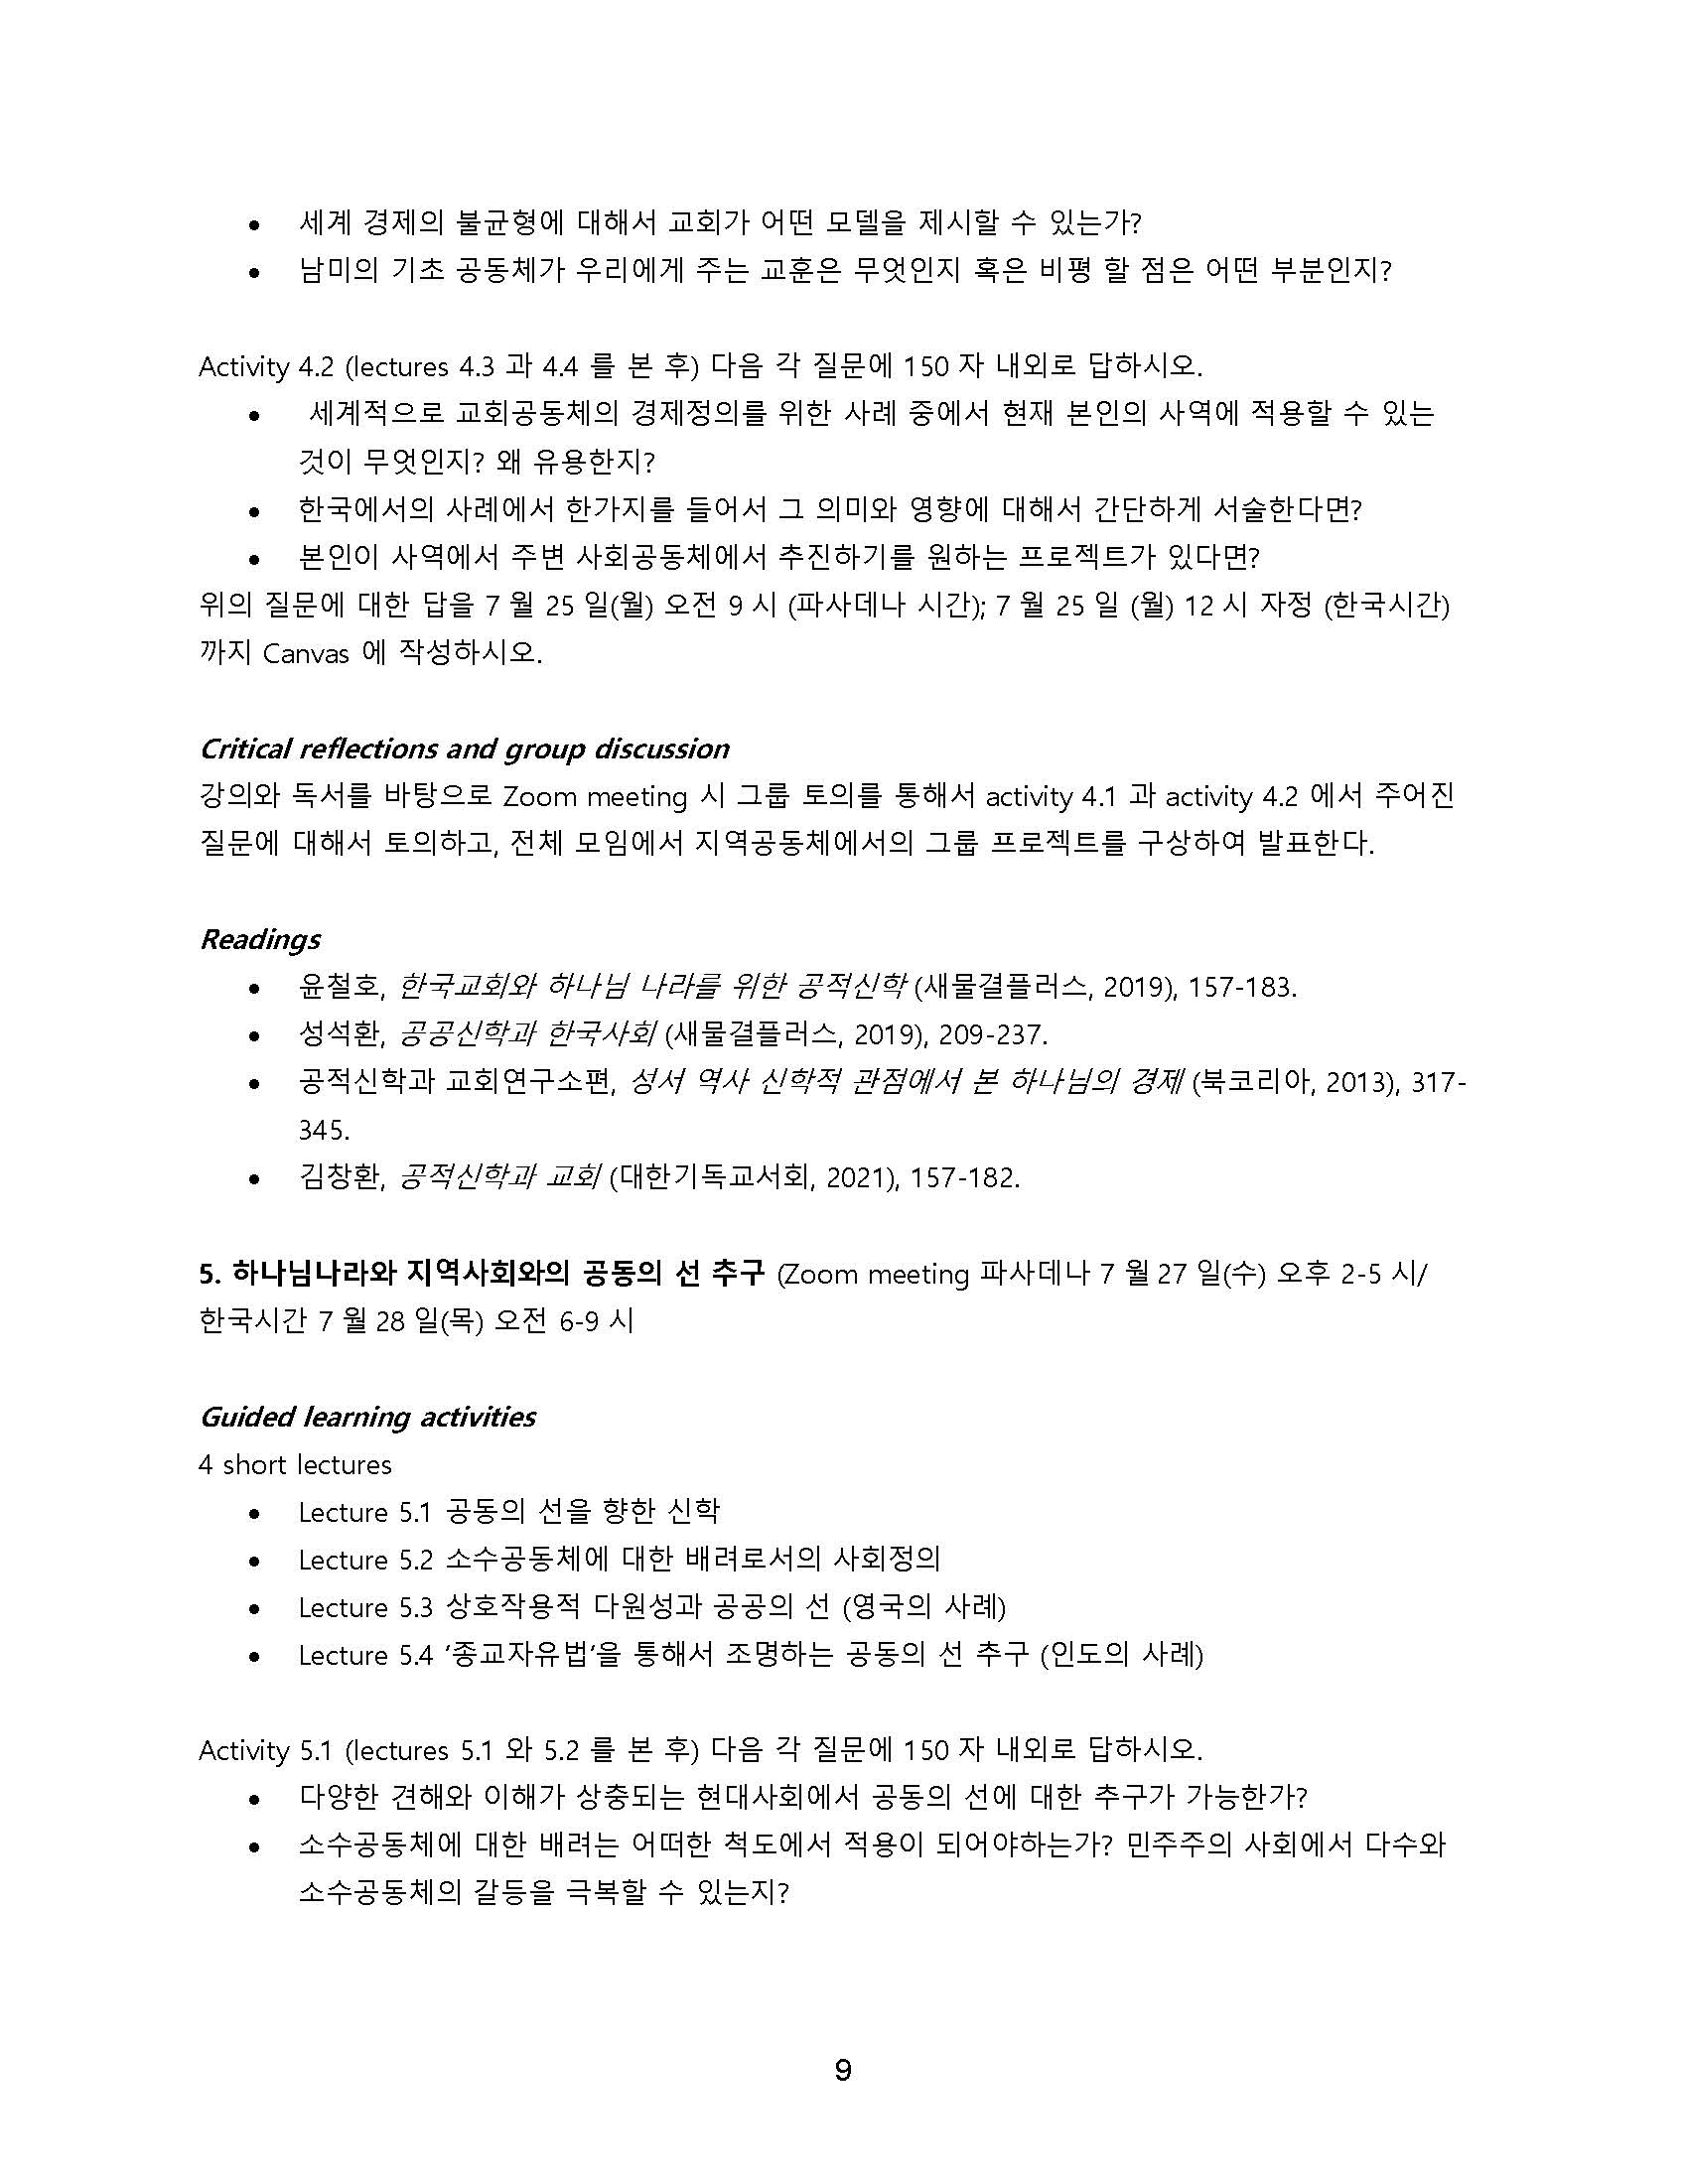 TH741 Public Theology - Korean - syllabus (1)_Page_09.jpg